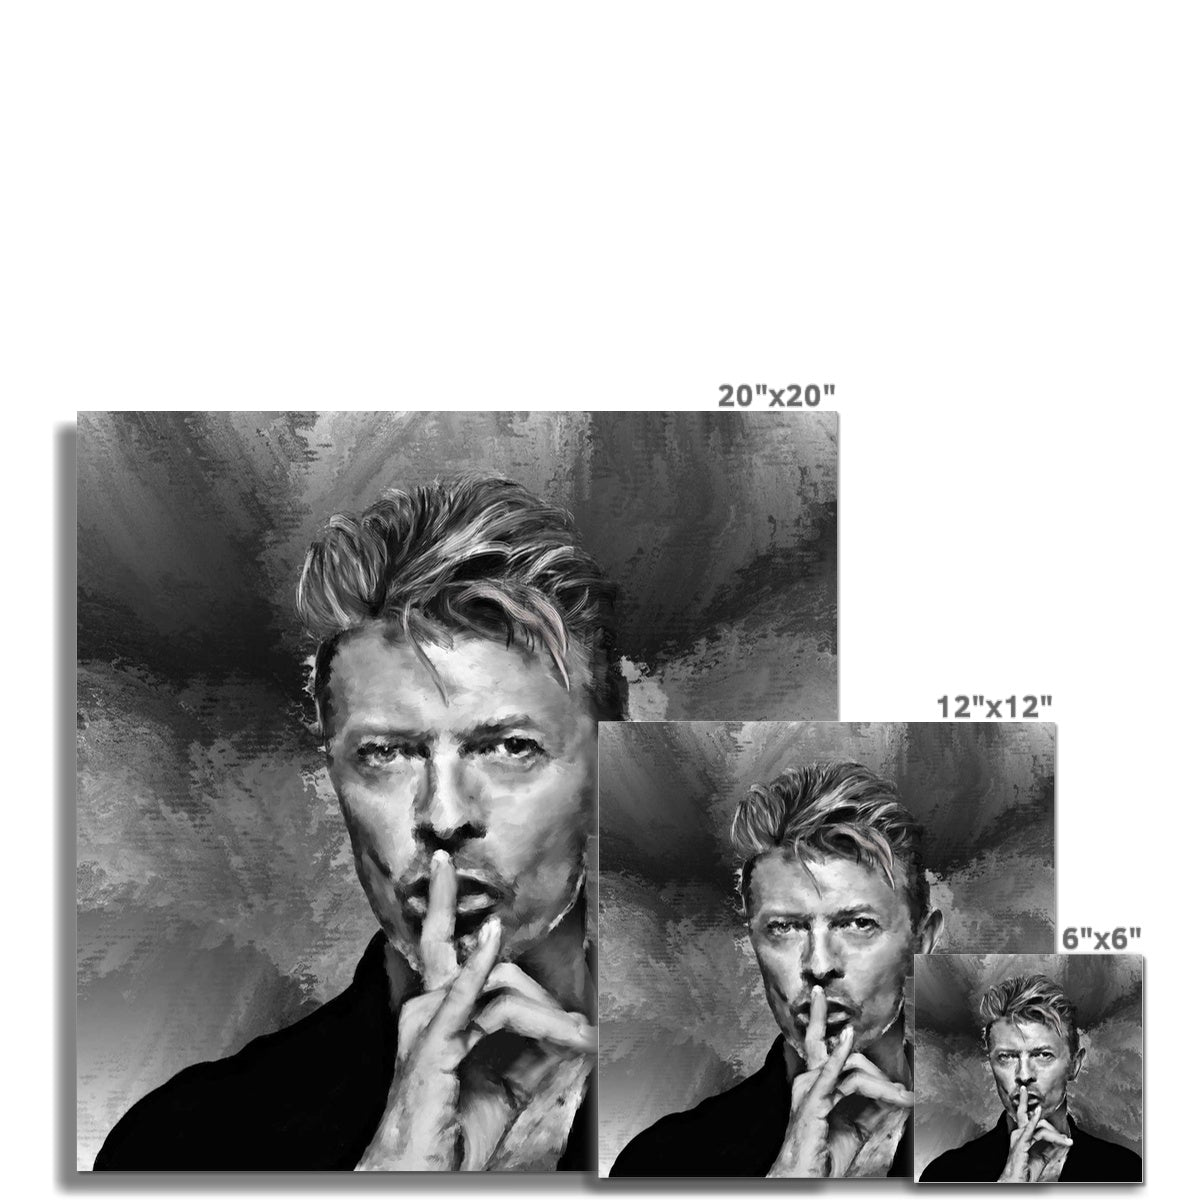 Bowie 'Shhh!' Painting Hahnemühle German Etching Print